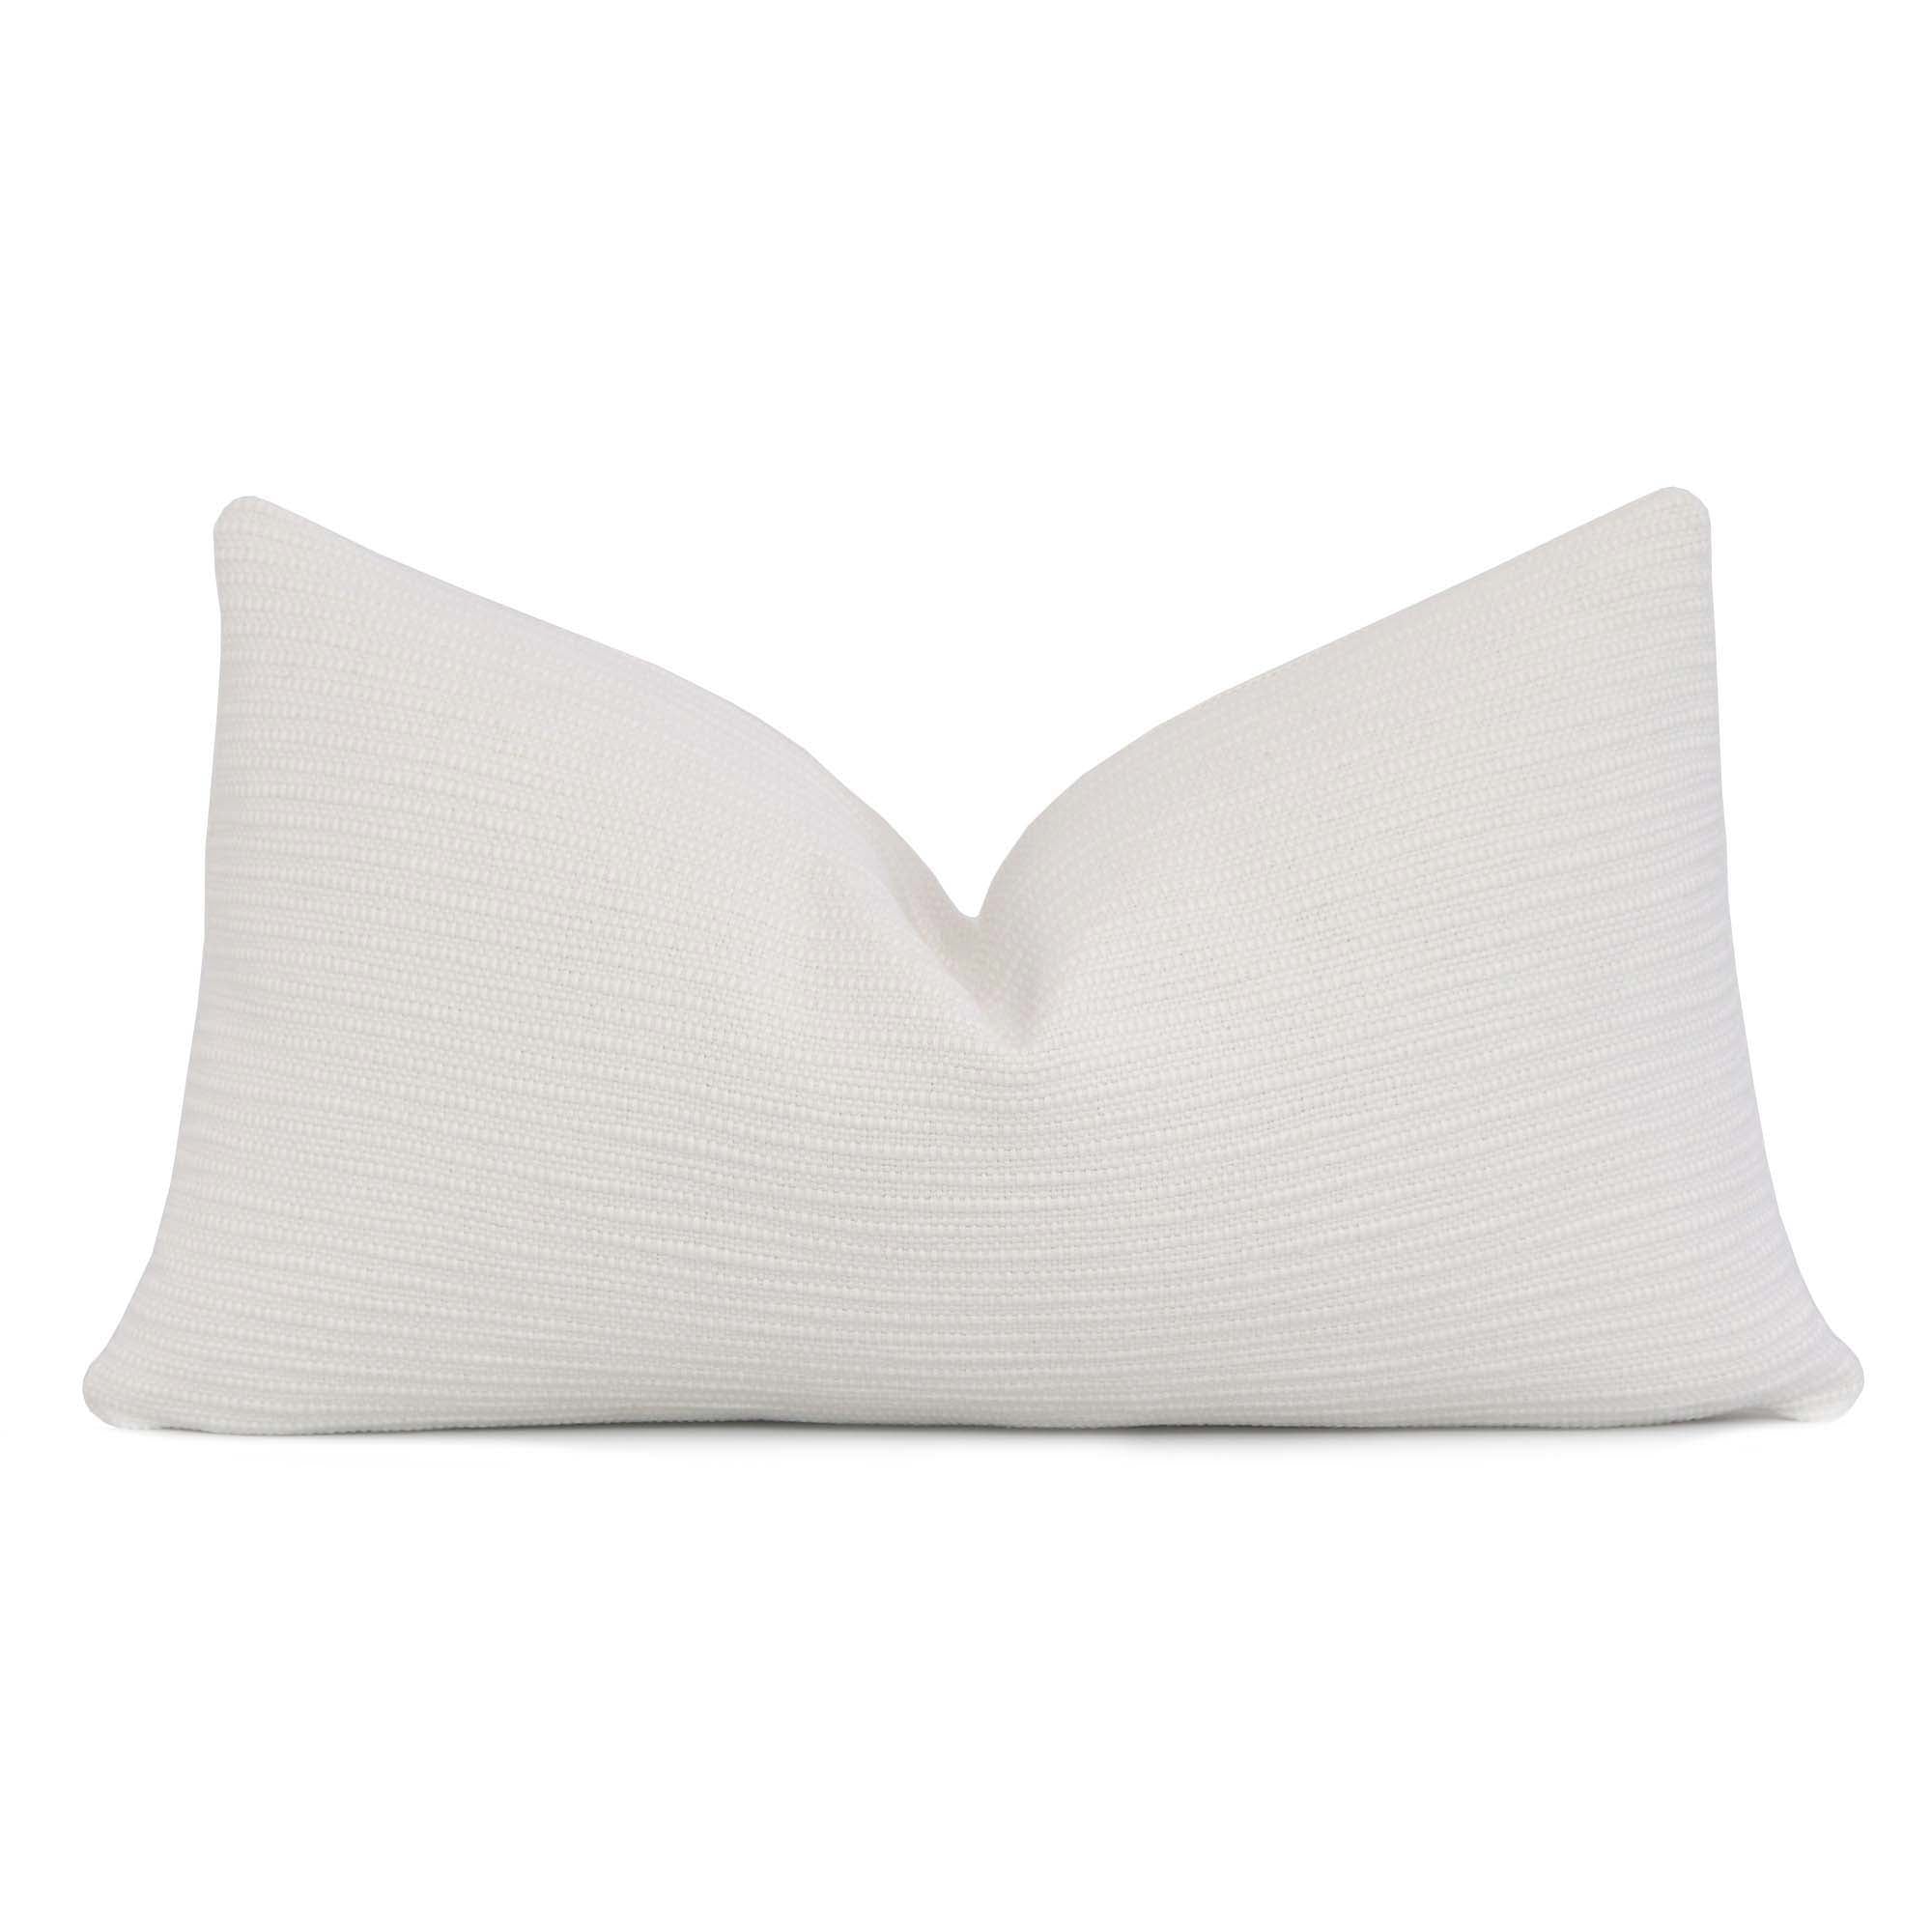 Solid White - Lumbar Pillow - Decorative Accent Pillow, Throw Pillow,  Pillow Cover, Pillow Case - RECTANGLE - 13 x 22 - Zipper Closure